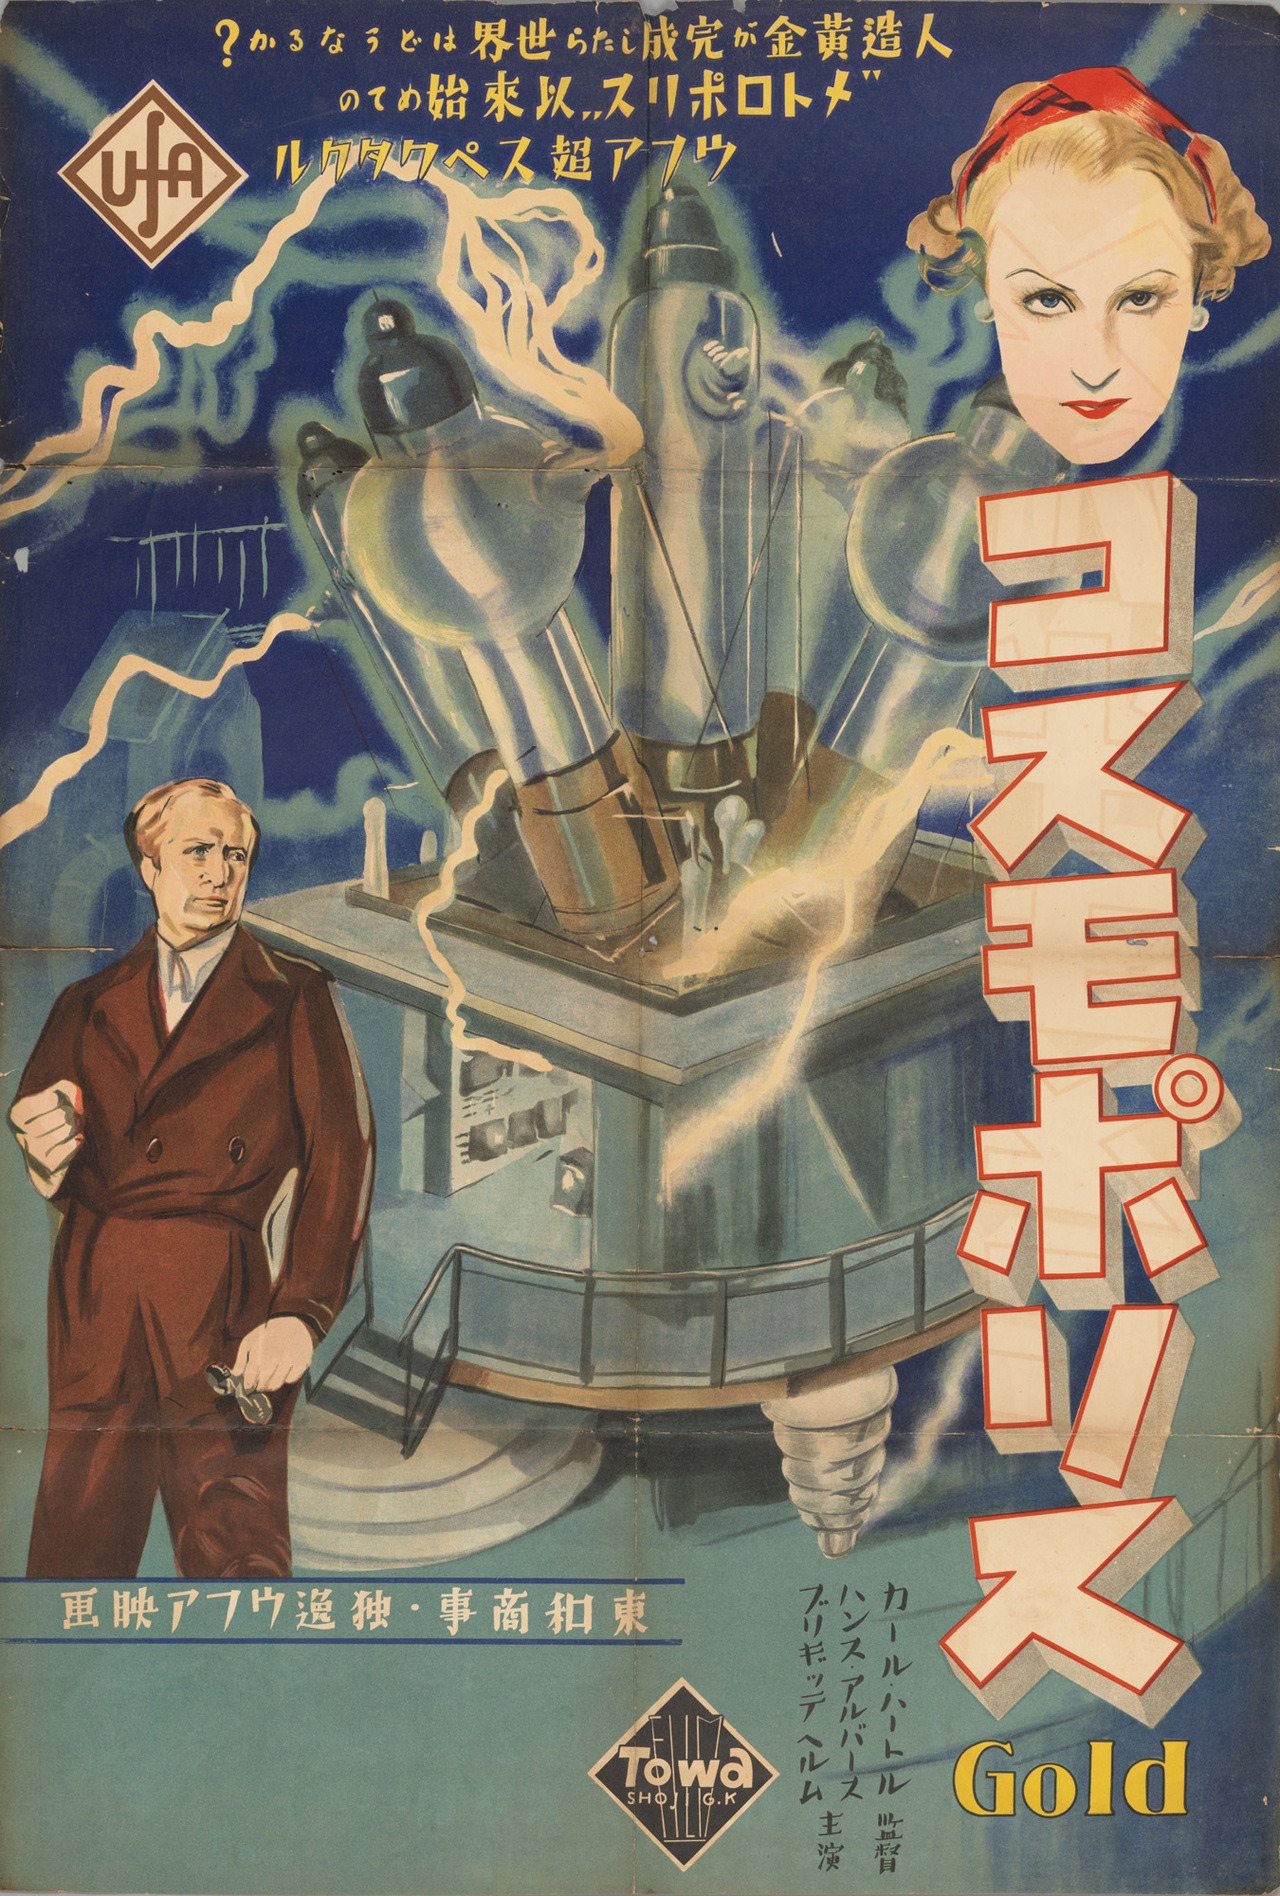 1935 Japanese poster for METROPOLIS (Fritz Lang, Germany, 1927) .jpg